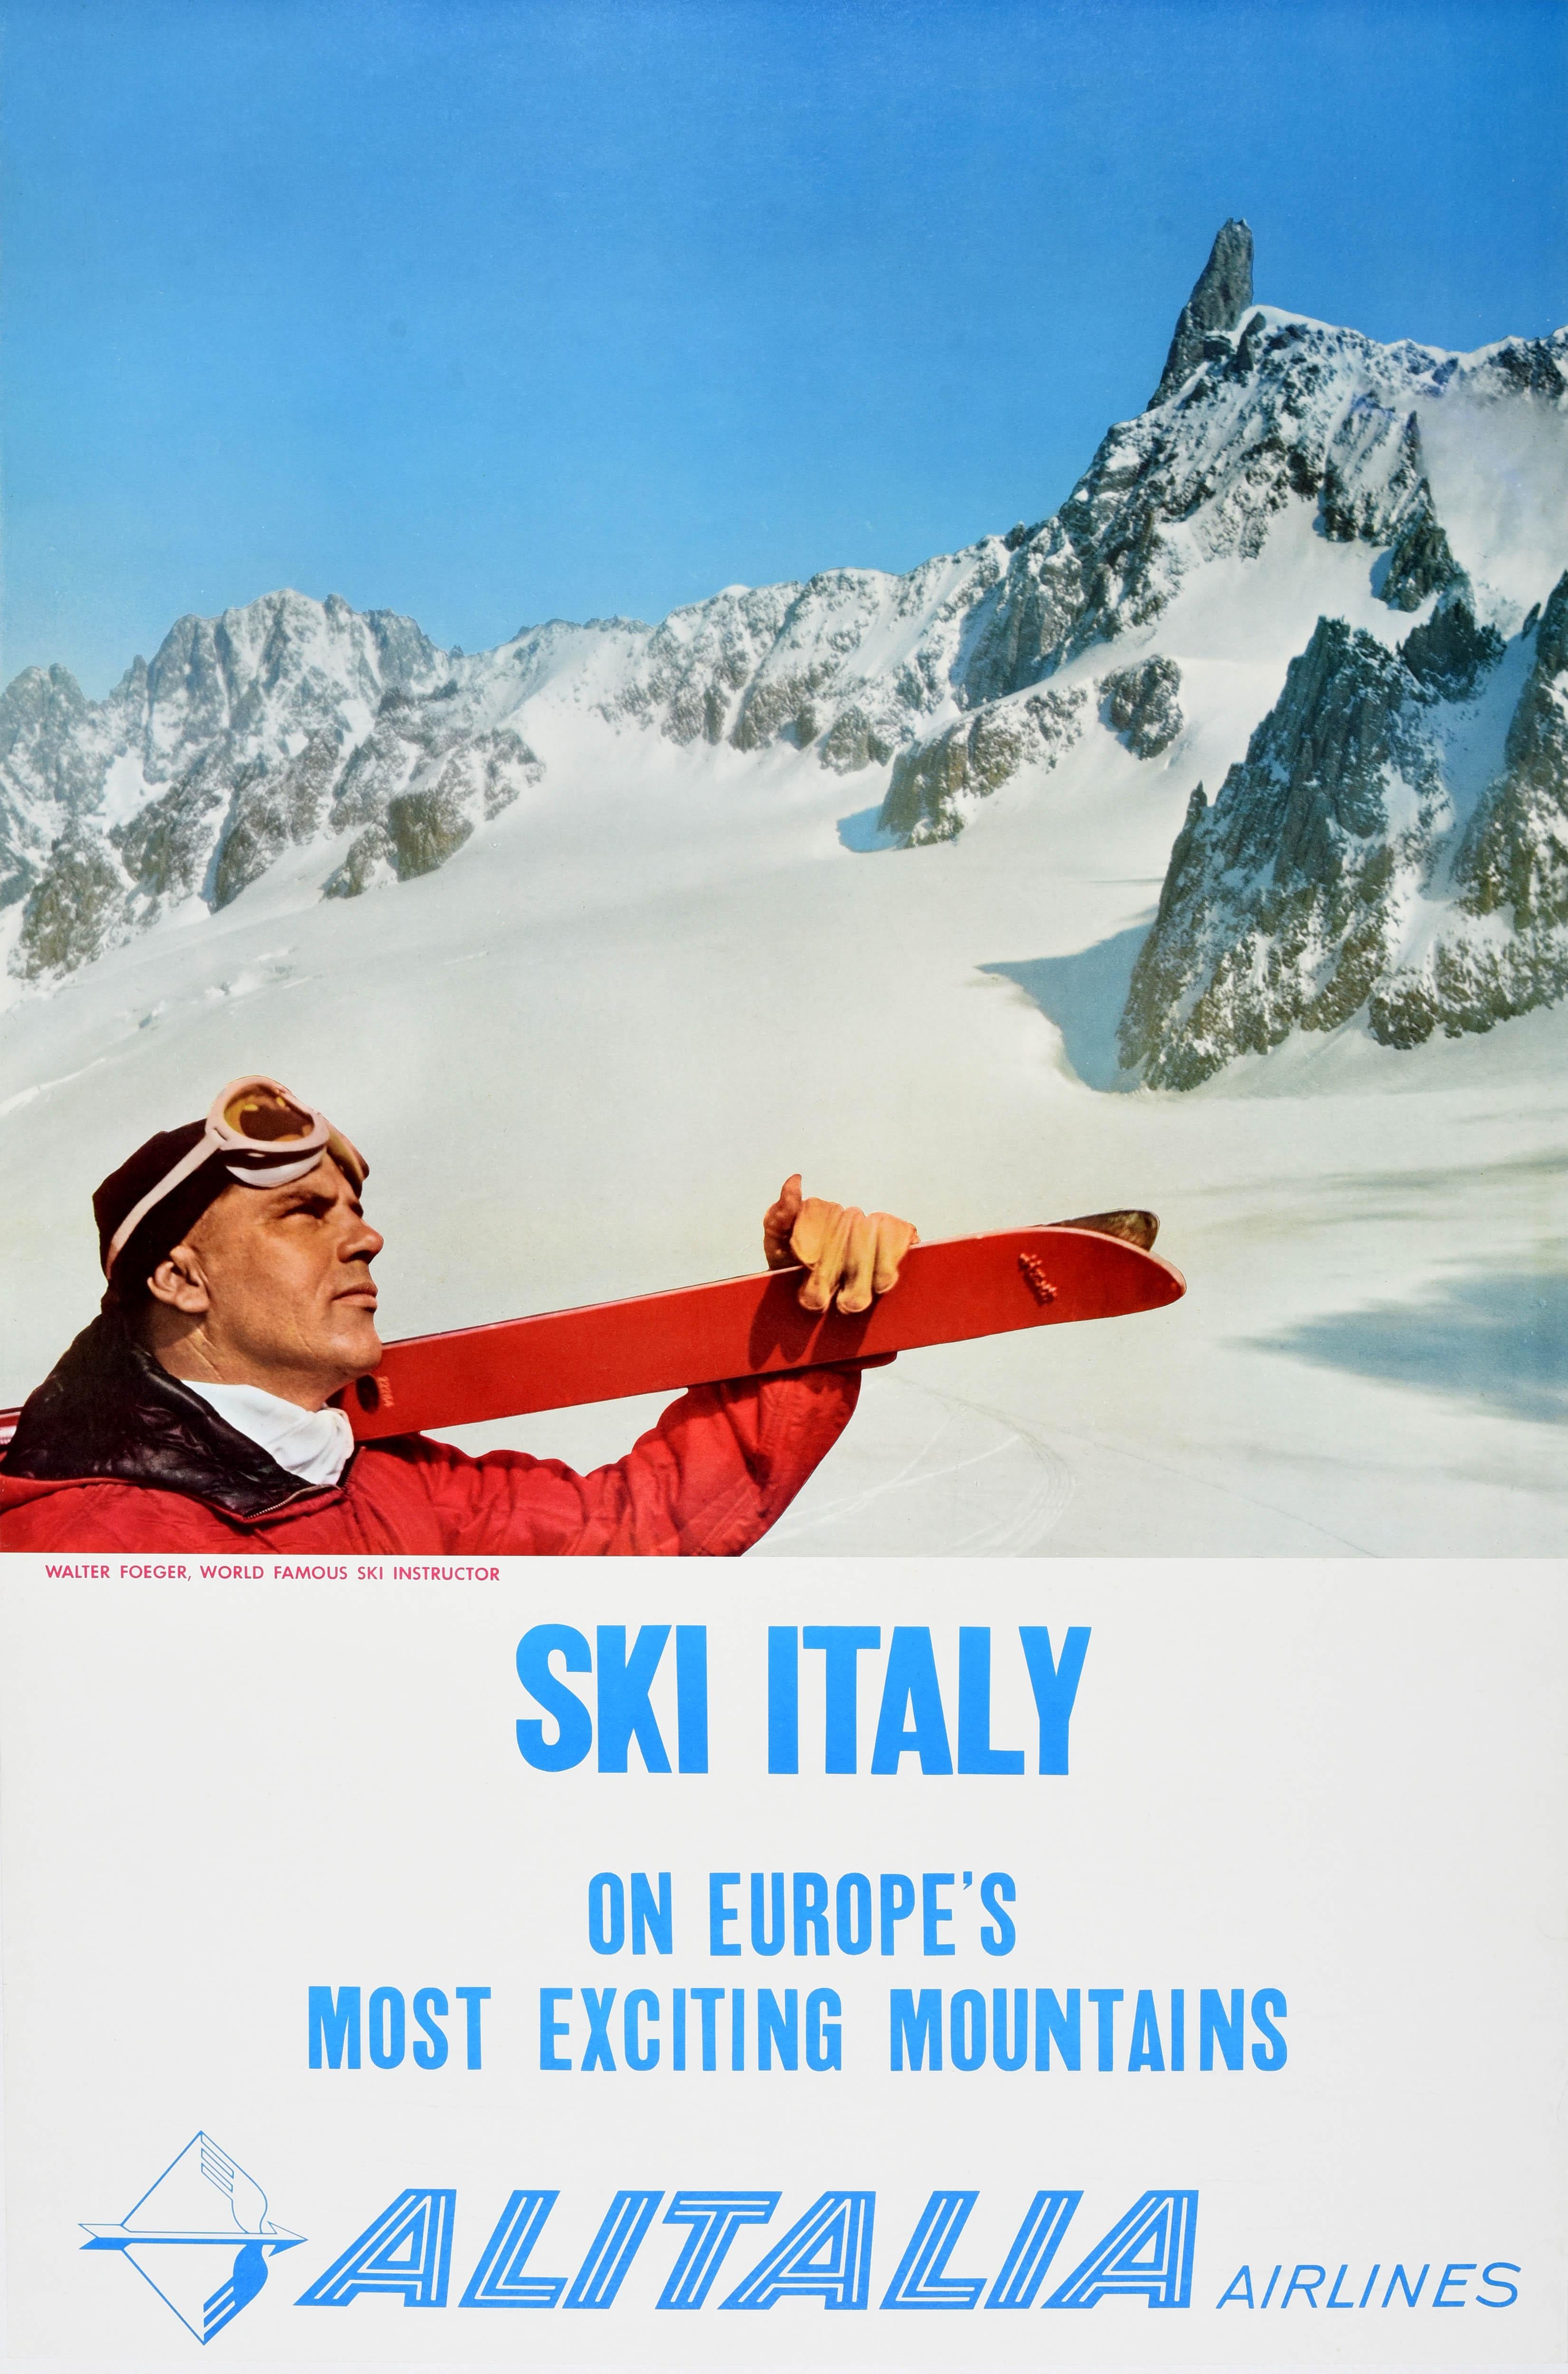 Unknown Print - Original Vintage Skiing Travel Poster Ski Italy Alitalia Airlines Walter Foeger